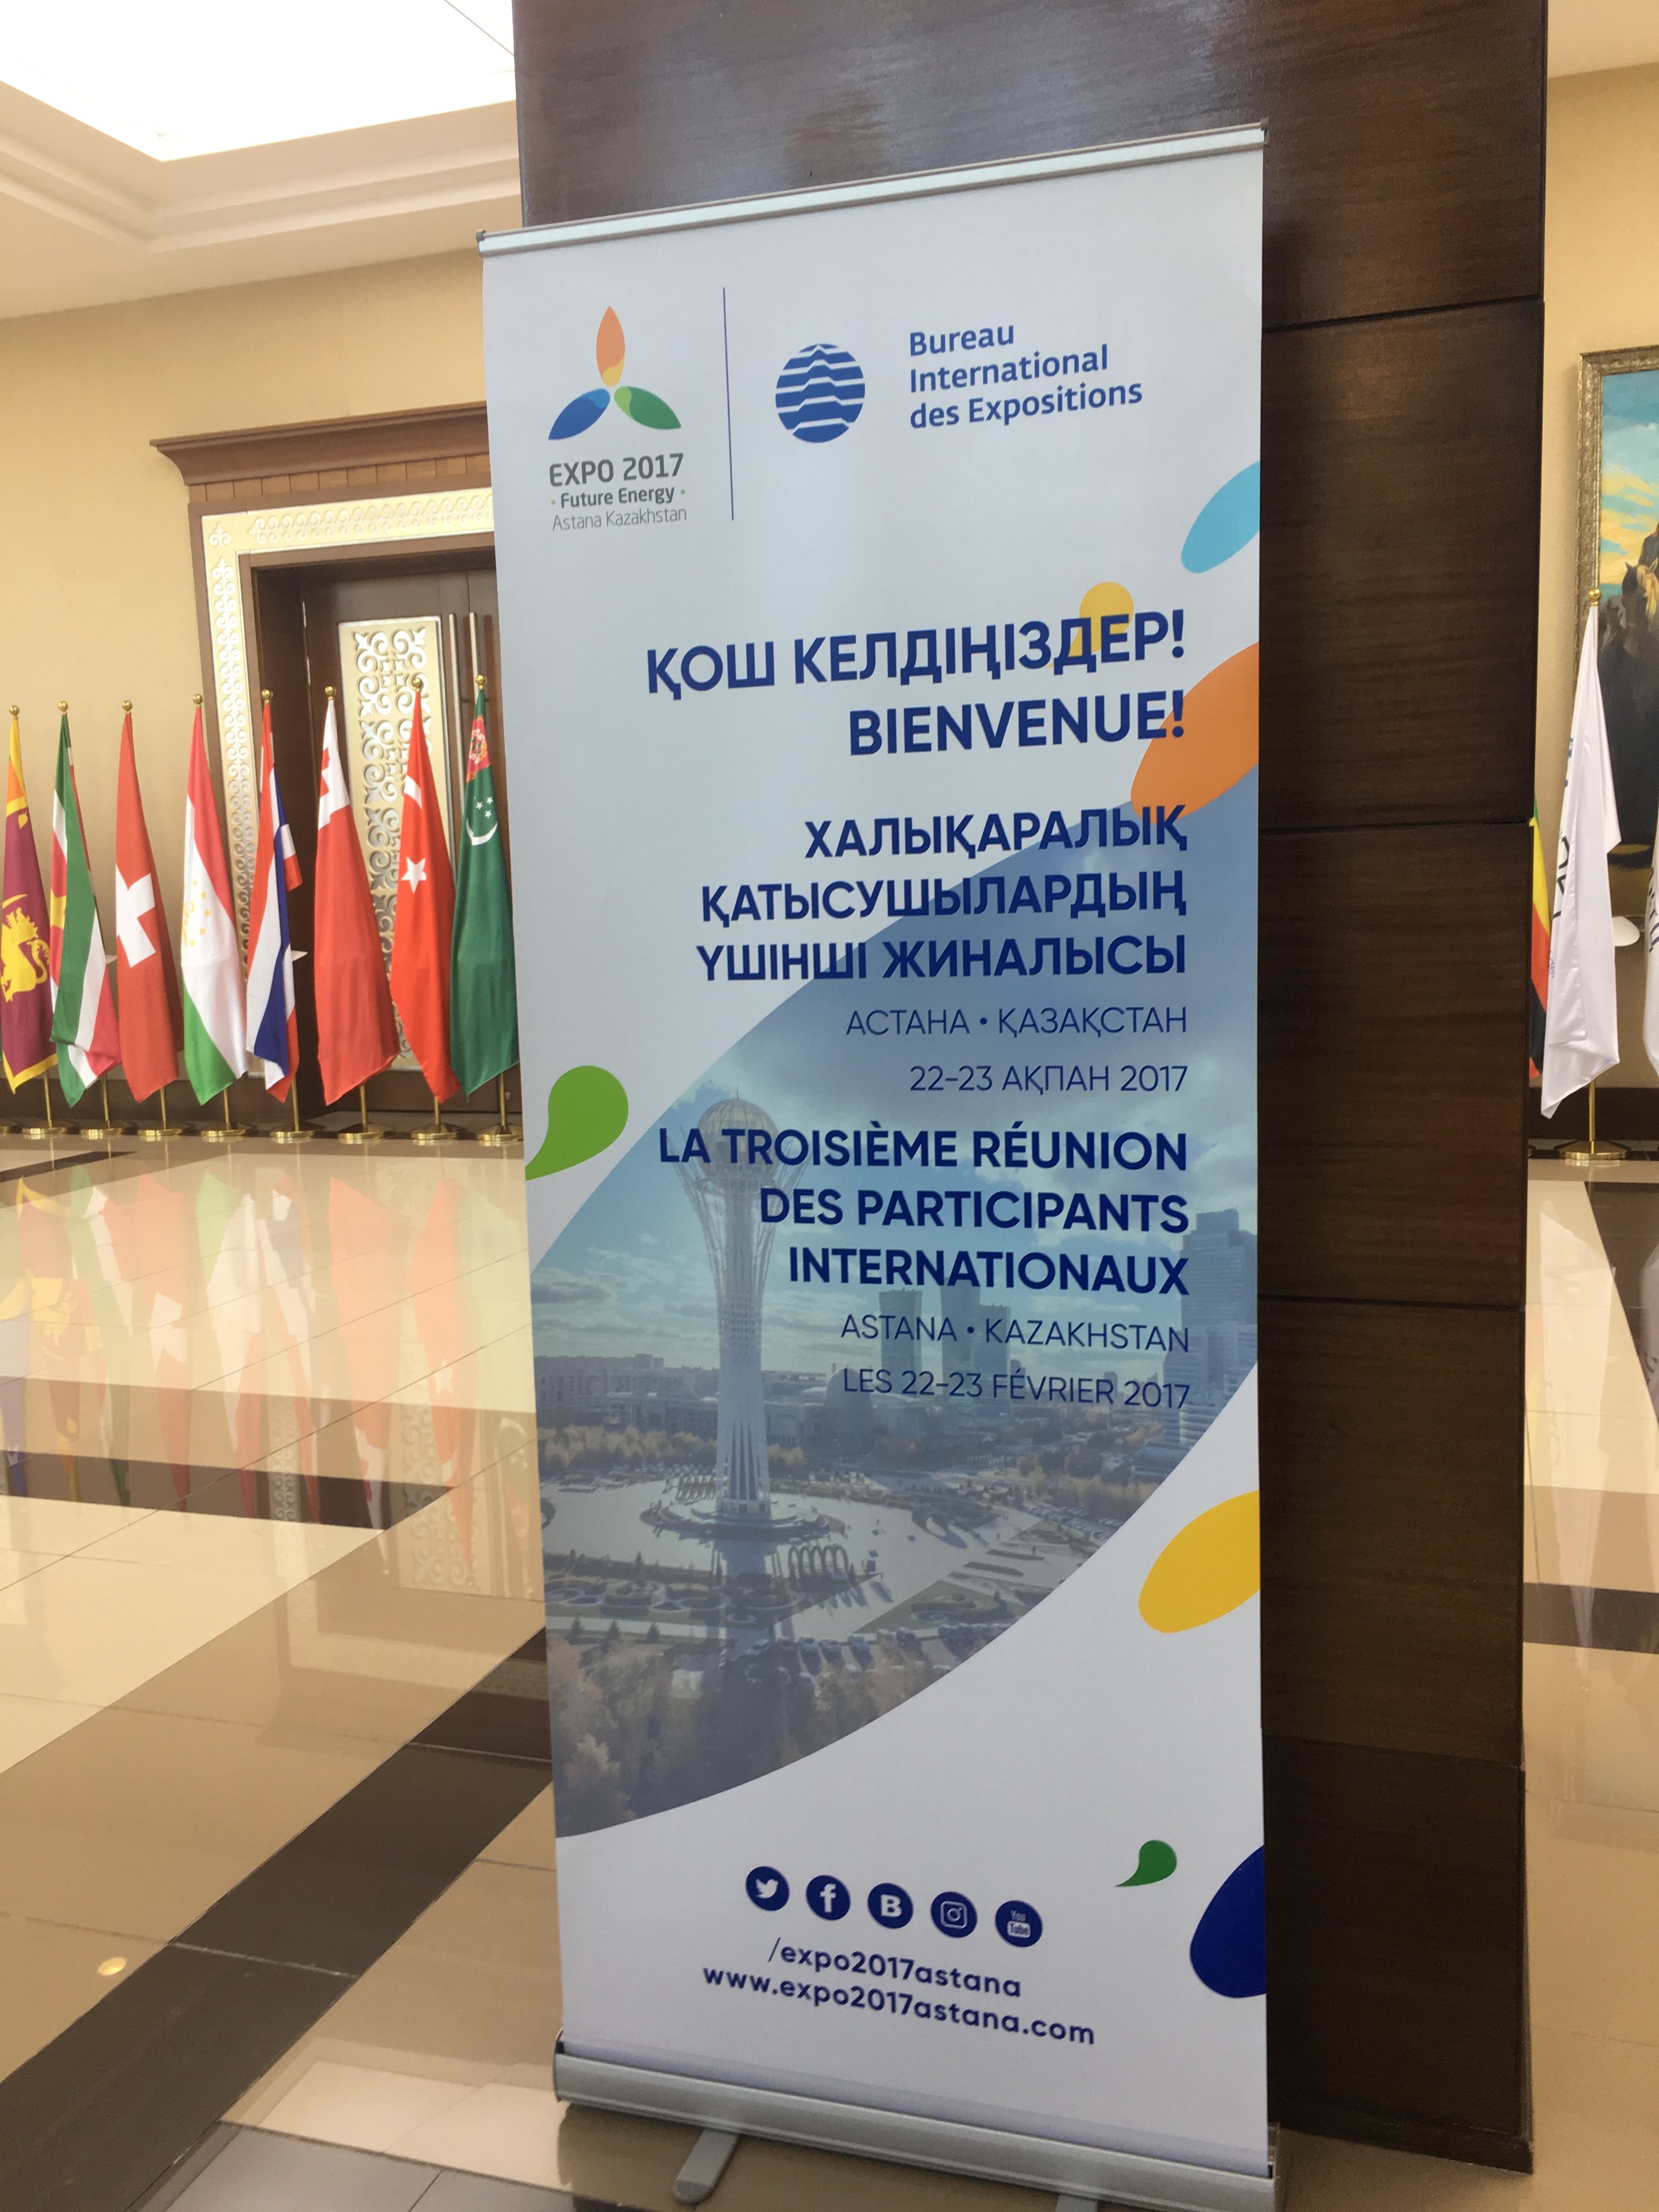 Essay on corruption kazakhstan exchange